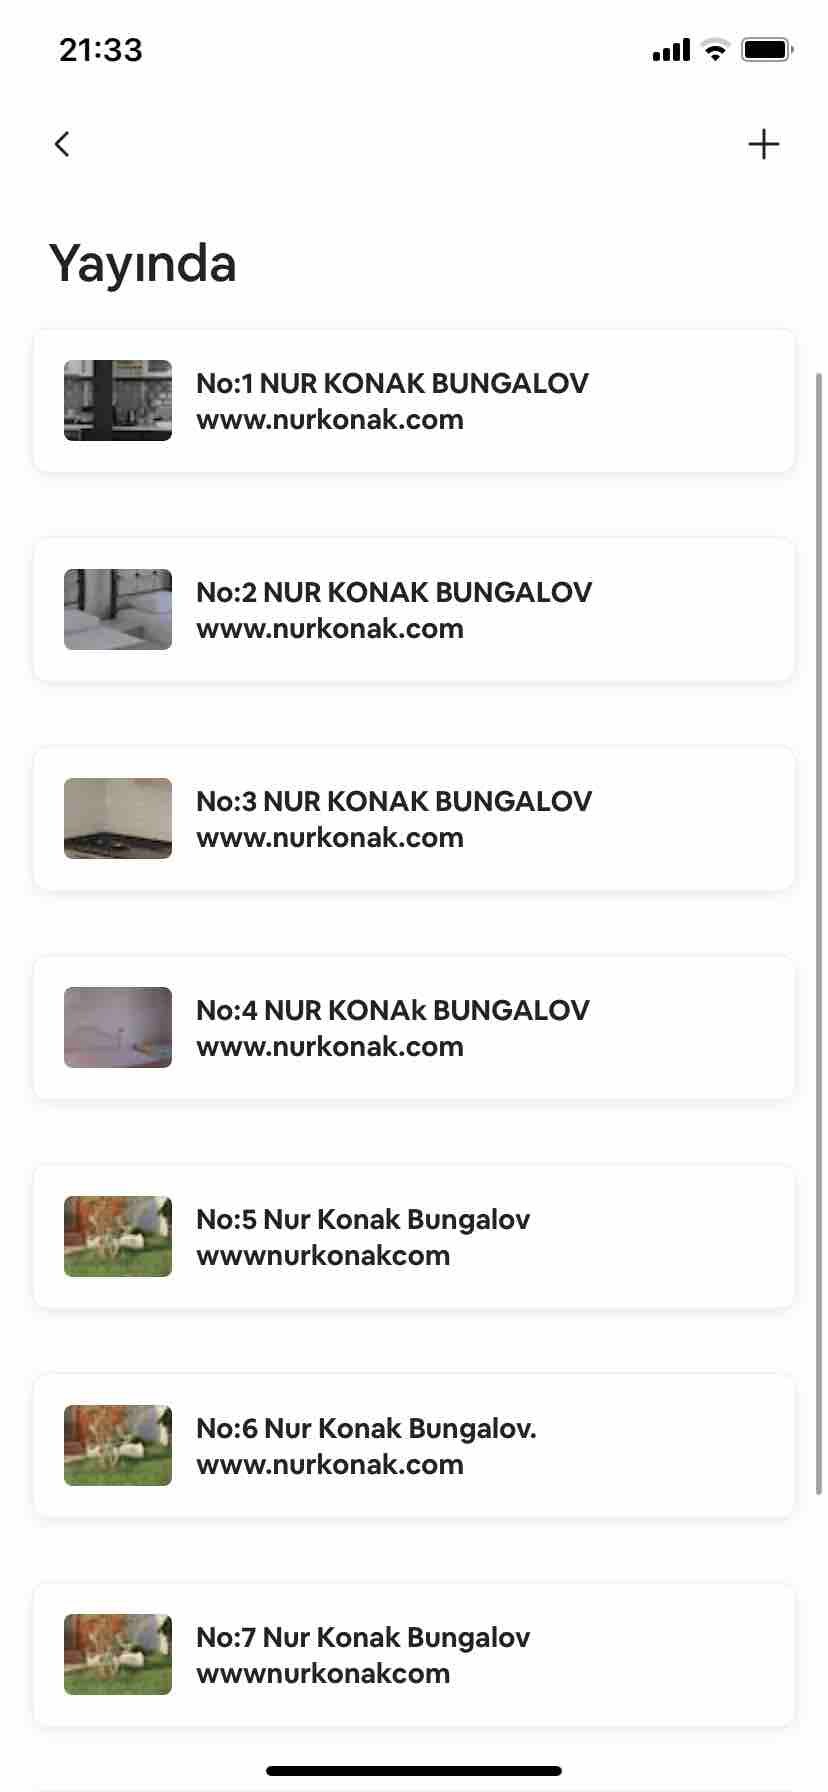 No:3 NUR KONAK BUNGALOV www.nurkonak.com